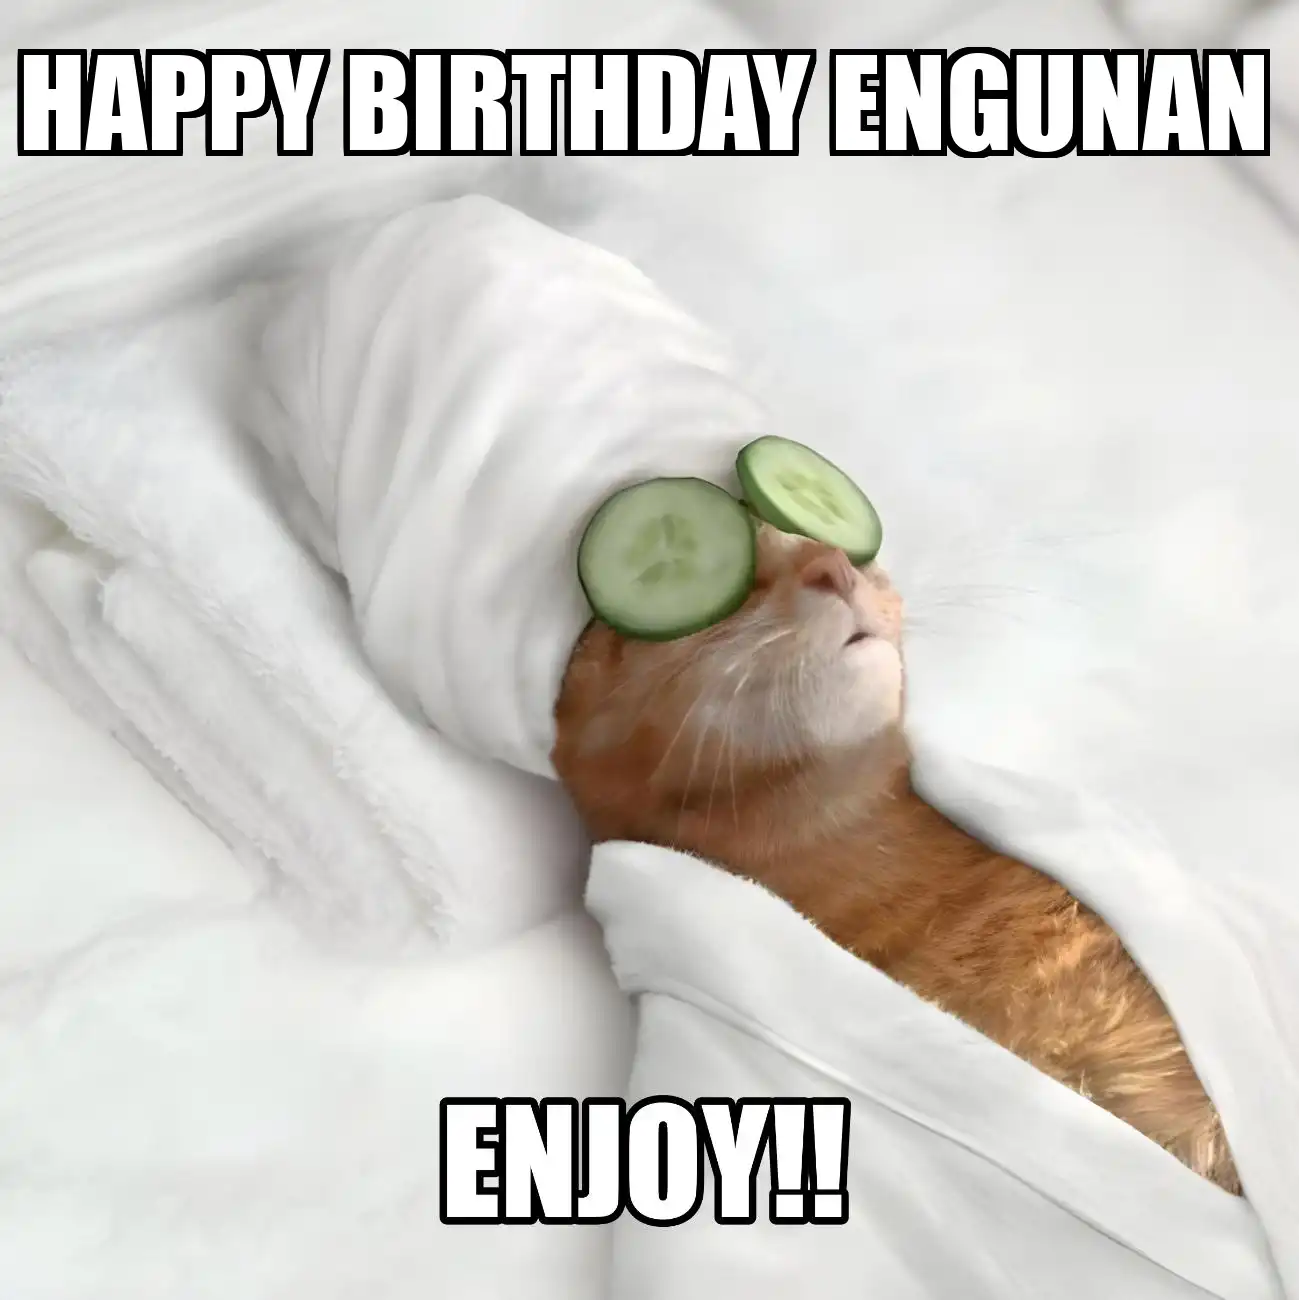 Happy Birthday Engunan Enjoy Cat Meme